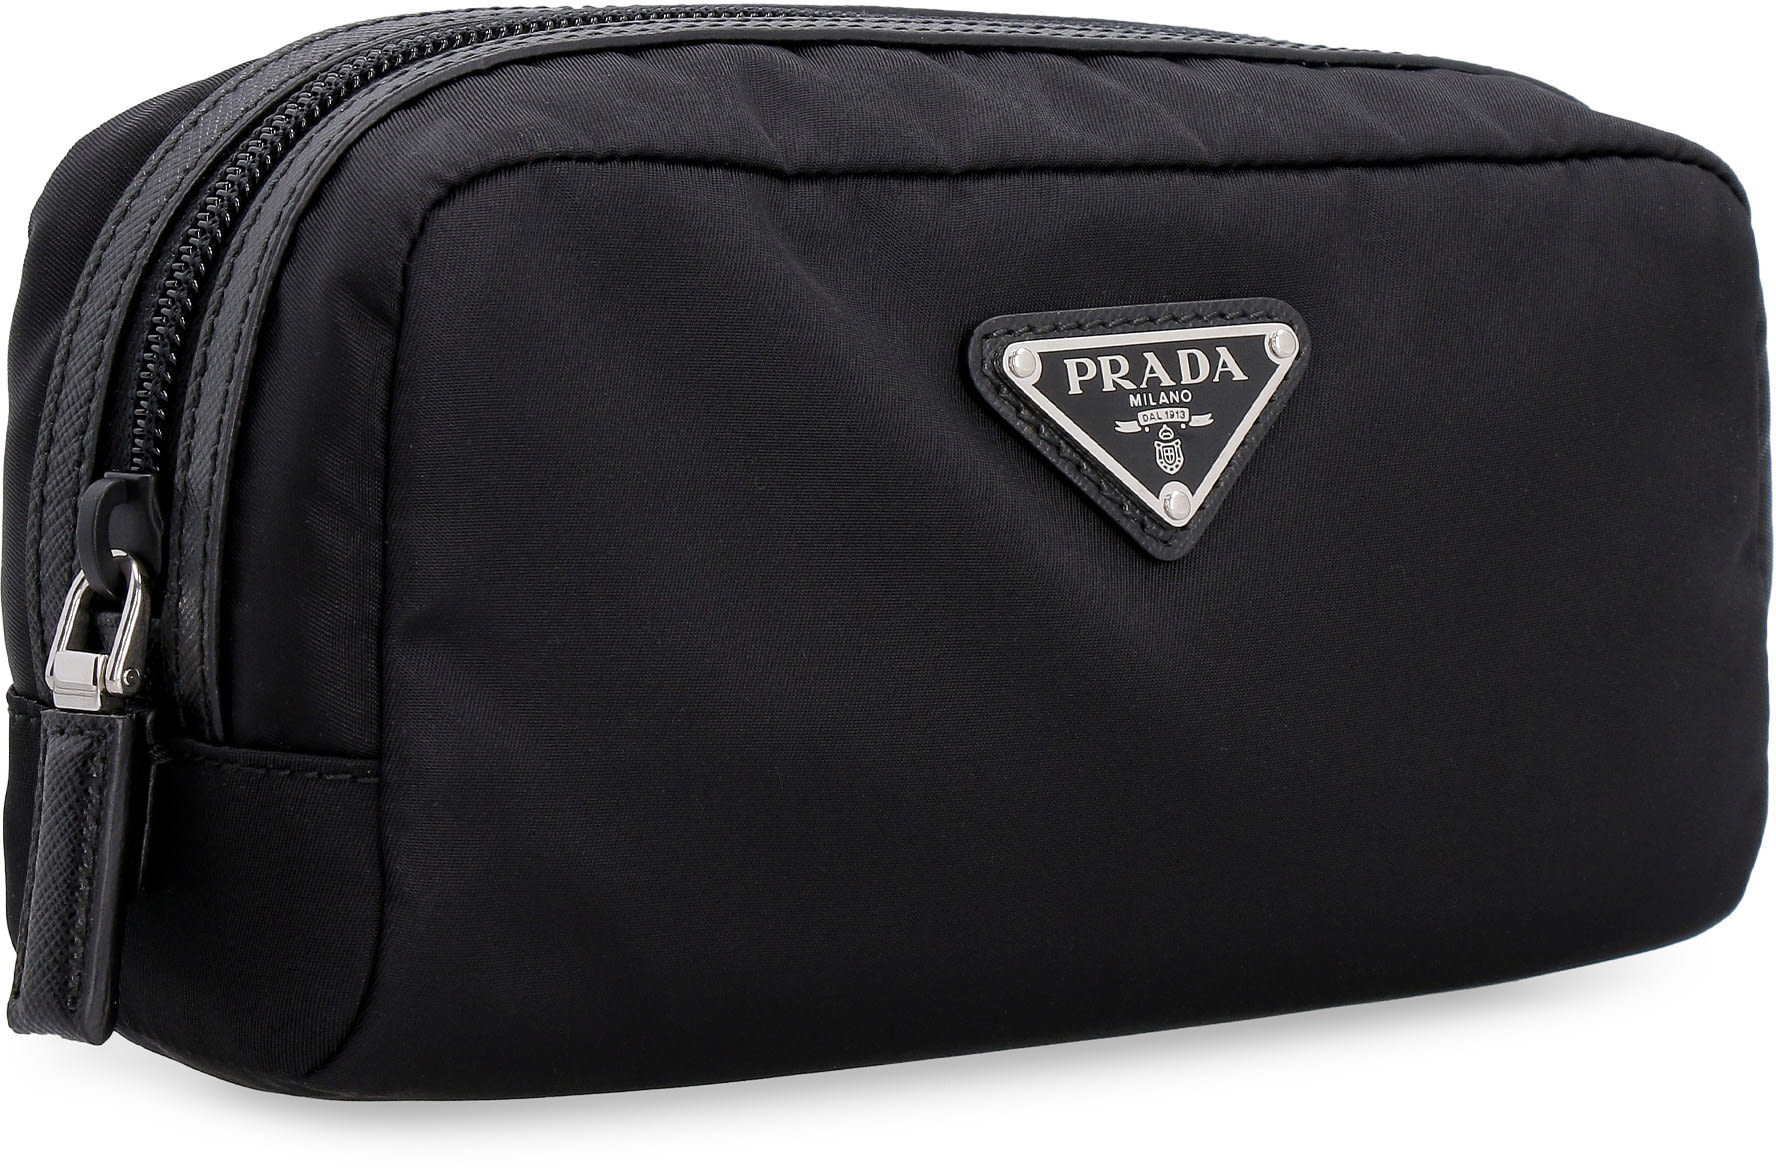 Prada - Black Nylon Small Zip Cosmetic Case